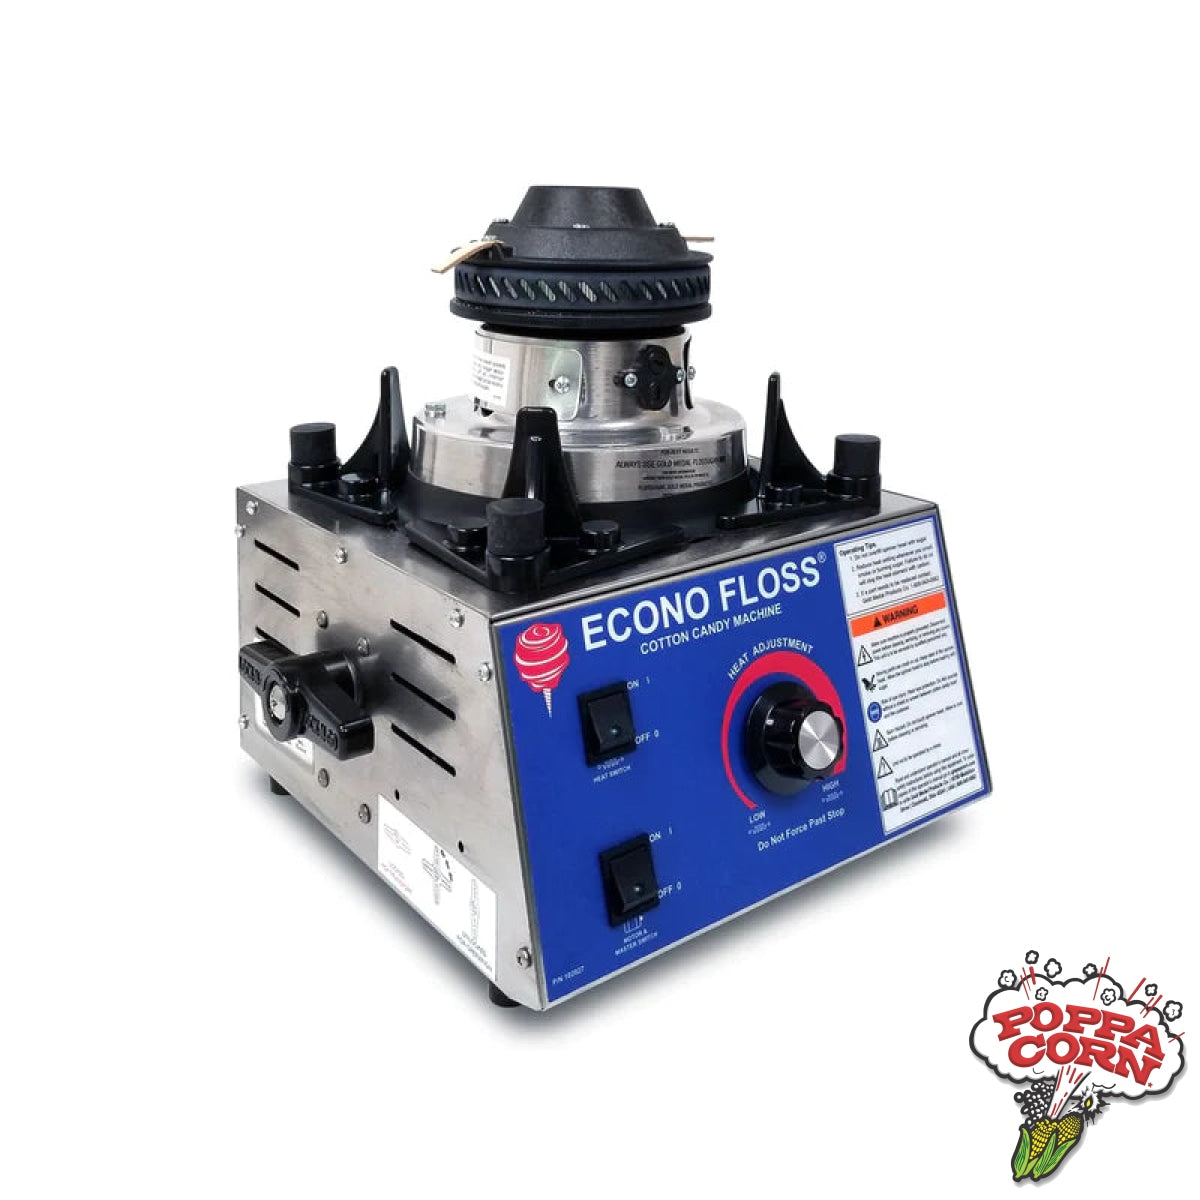 Econo Floss® Cotton Candy Machine - GM3017-00-000 - Poppa Corn Corp